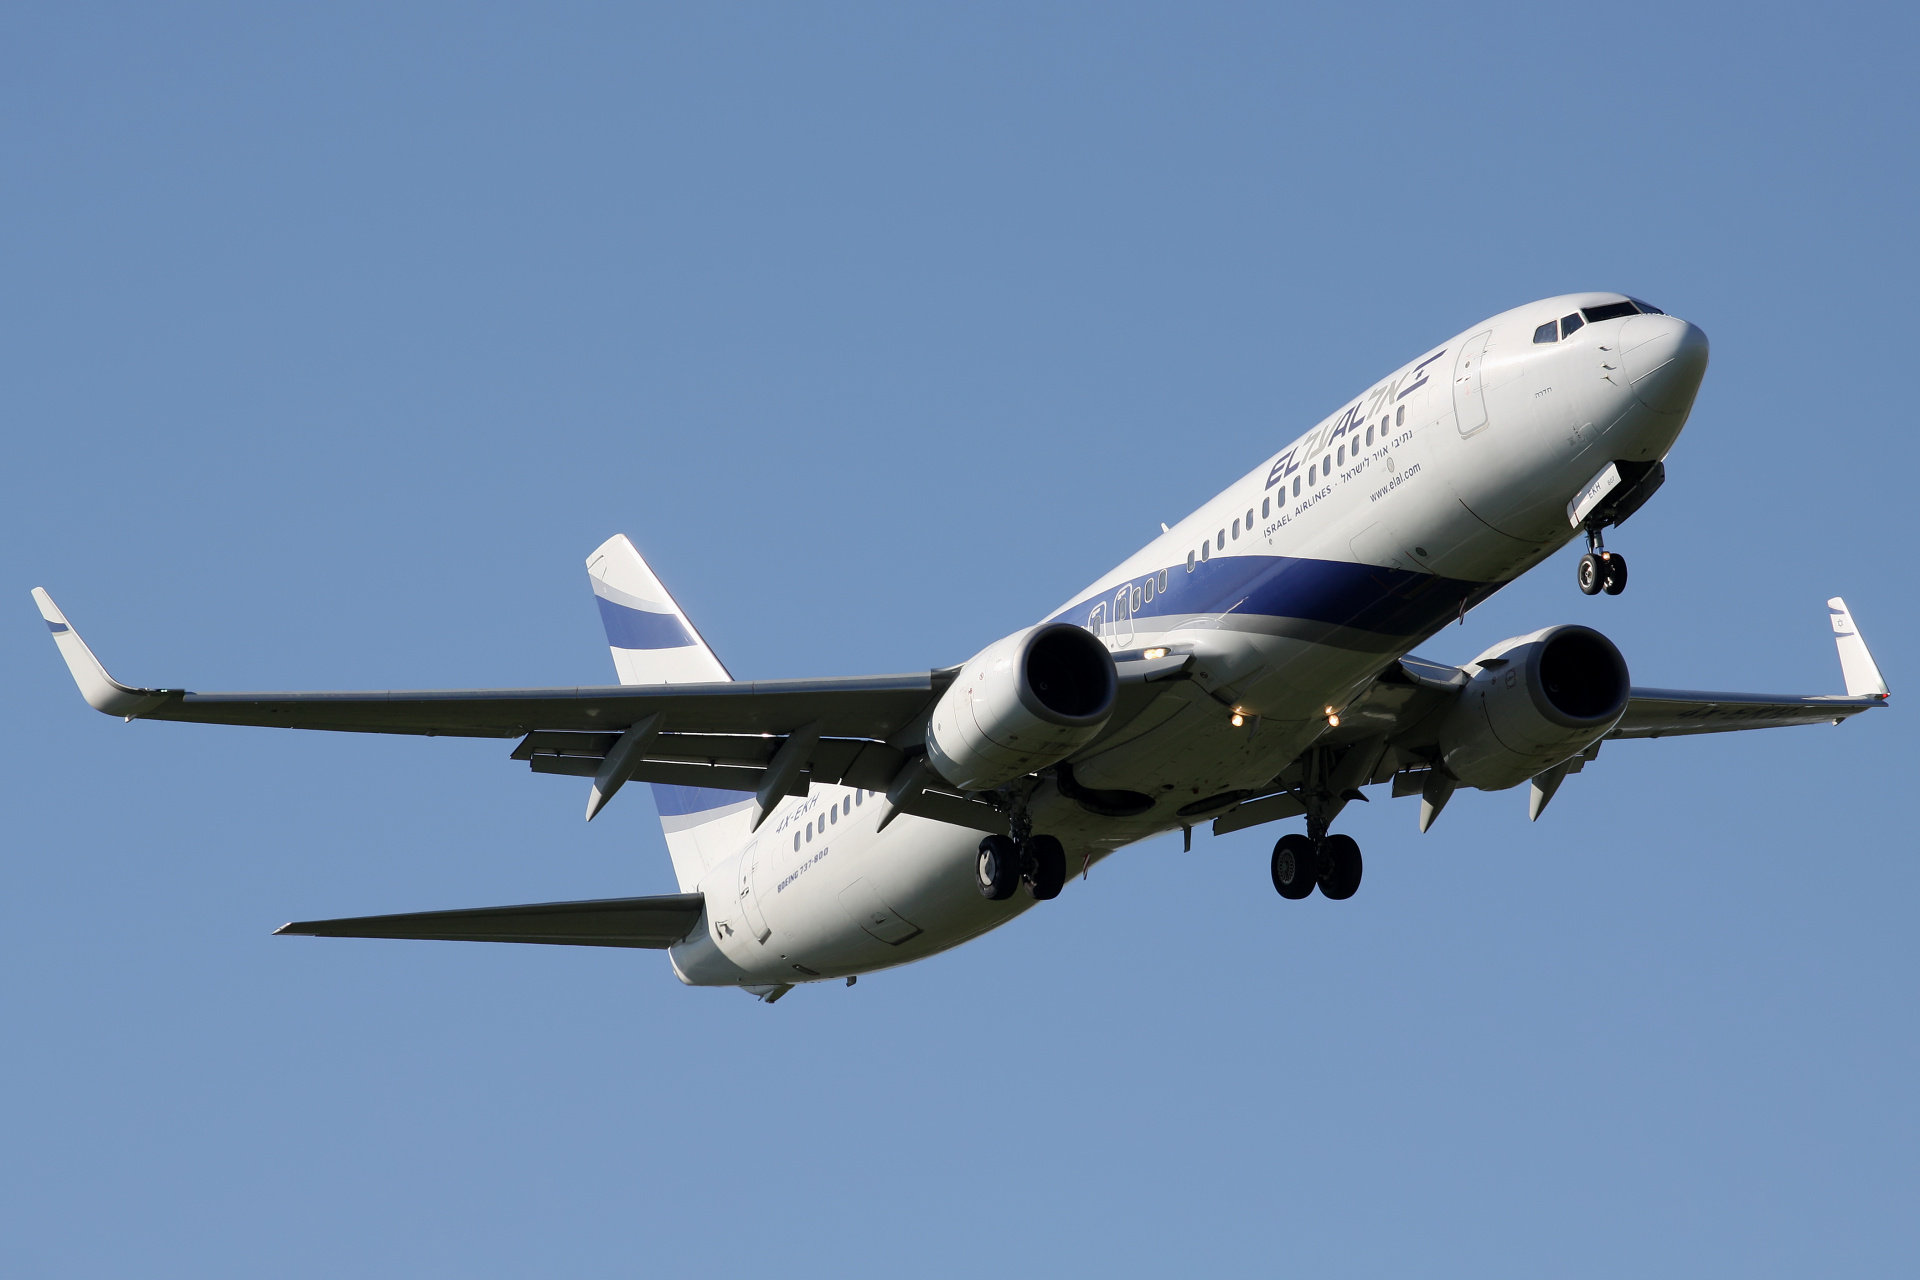 4X-EKH (Aircraft » EPWA Spotting » Boeing 737-800 » El Al Israel Airlines)